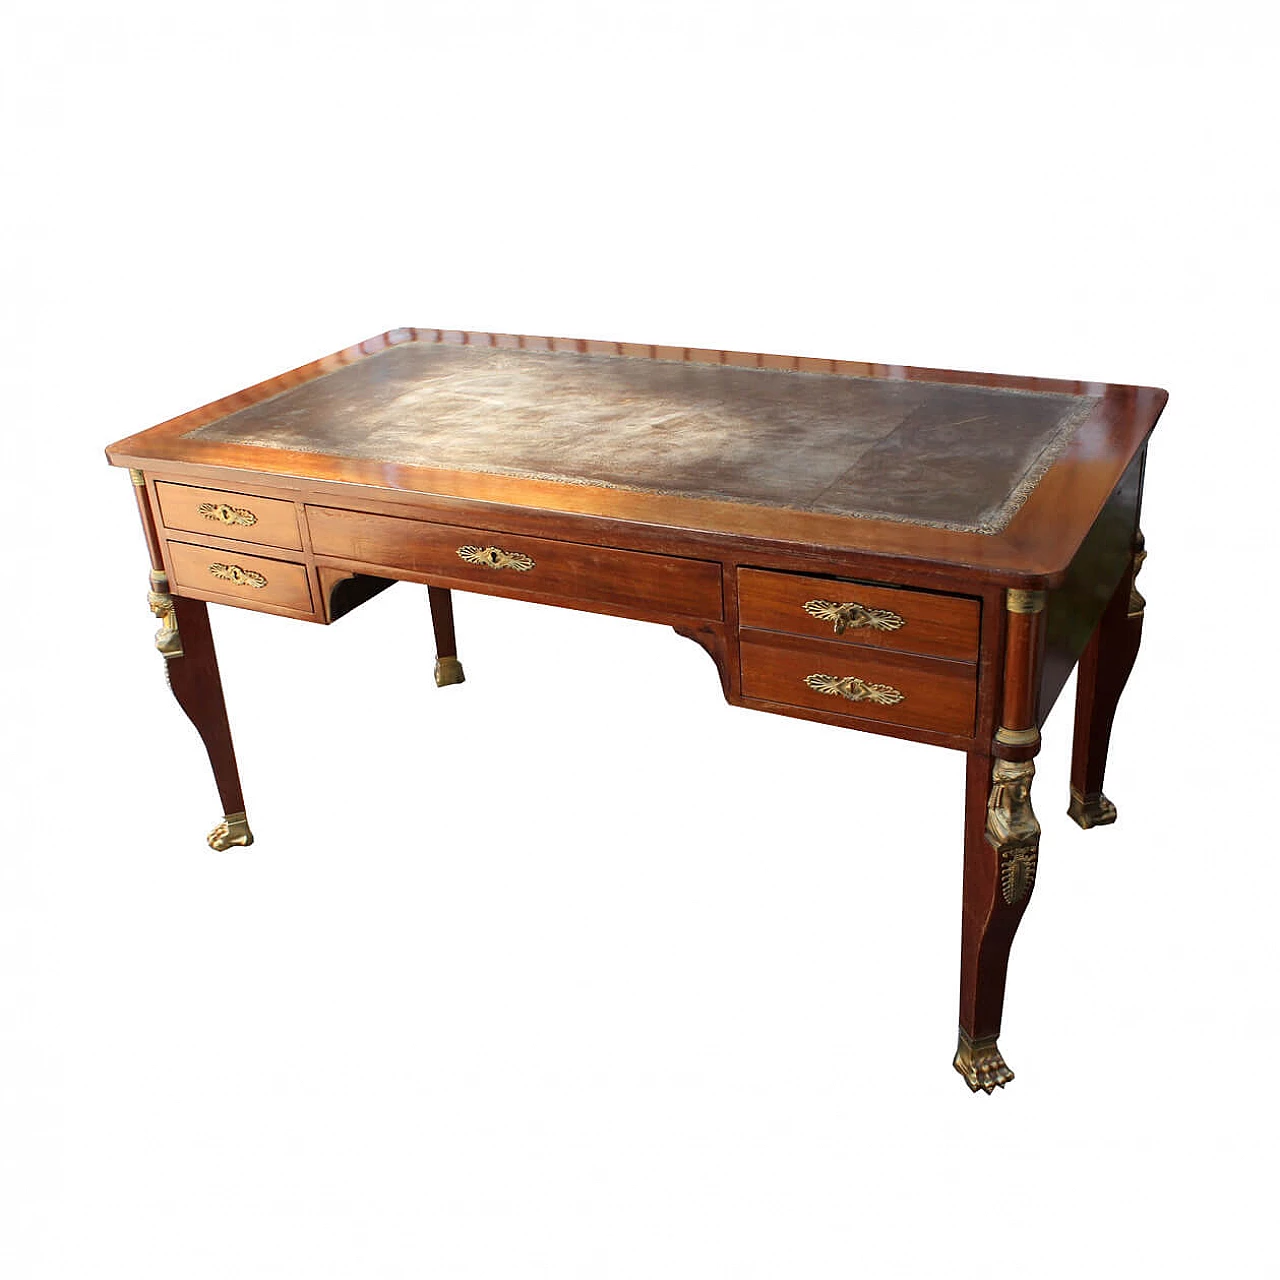 Retour d'Egypte desk in solid mahogany, 19th century 1157821